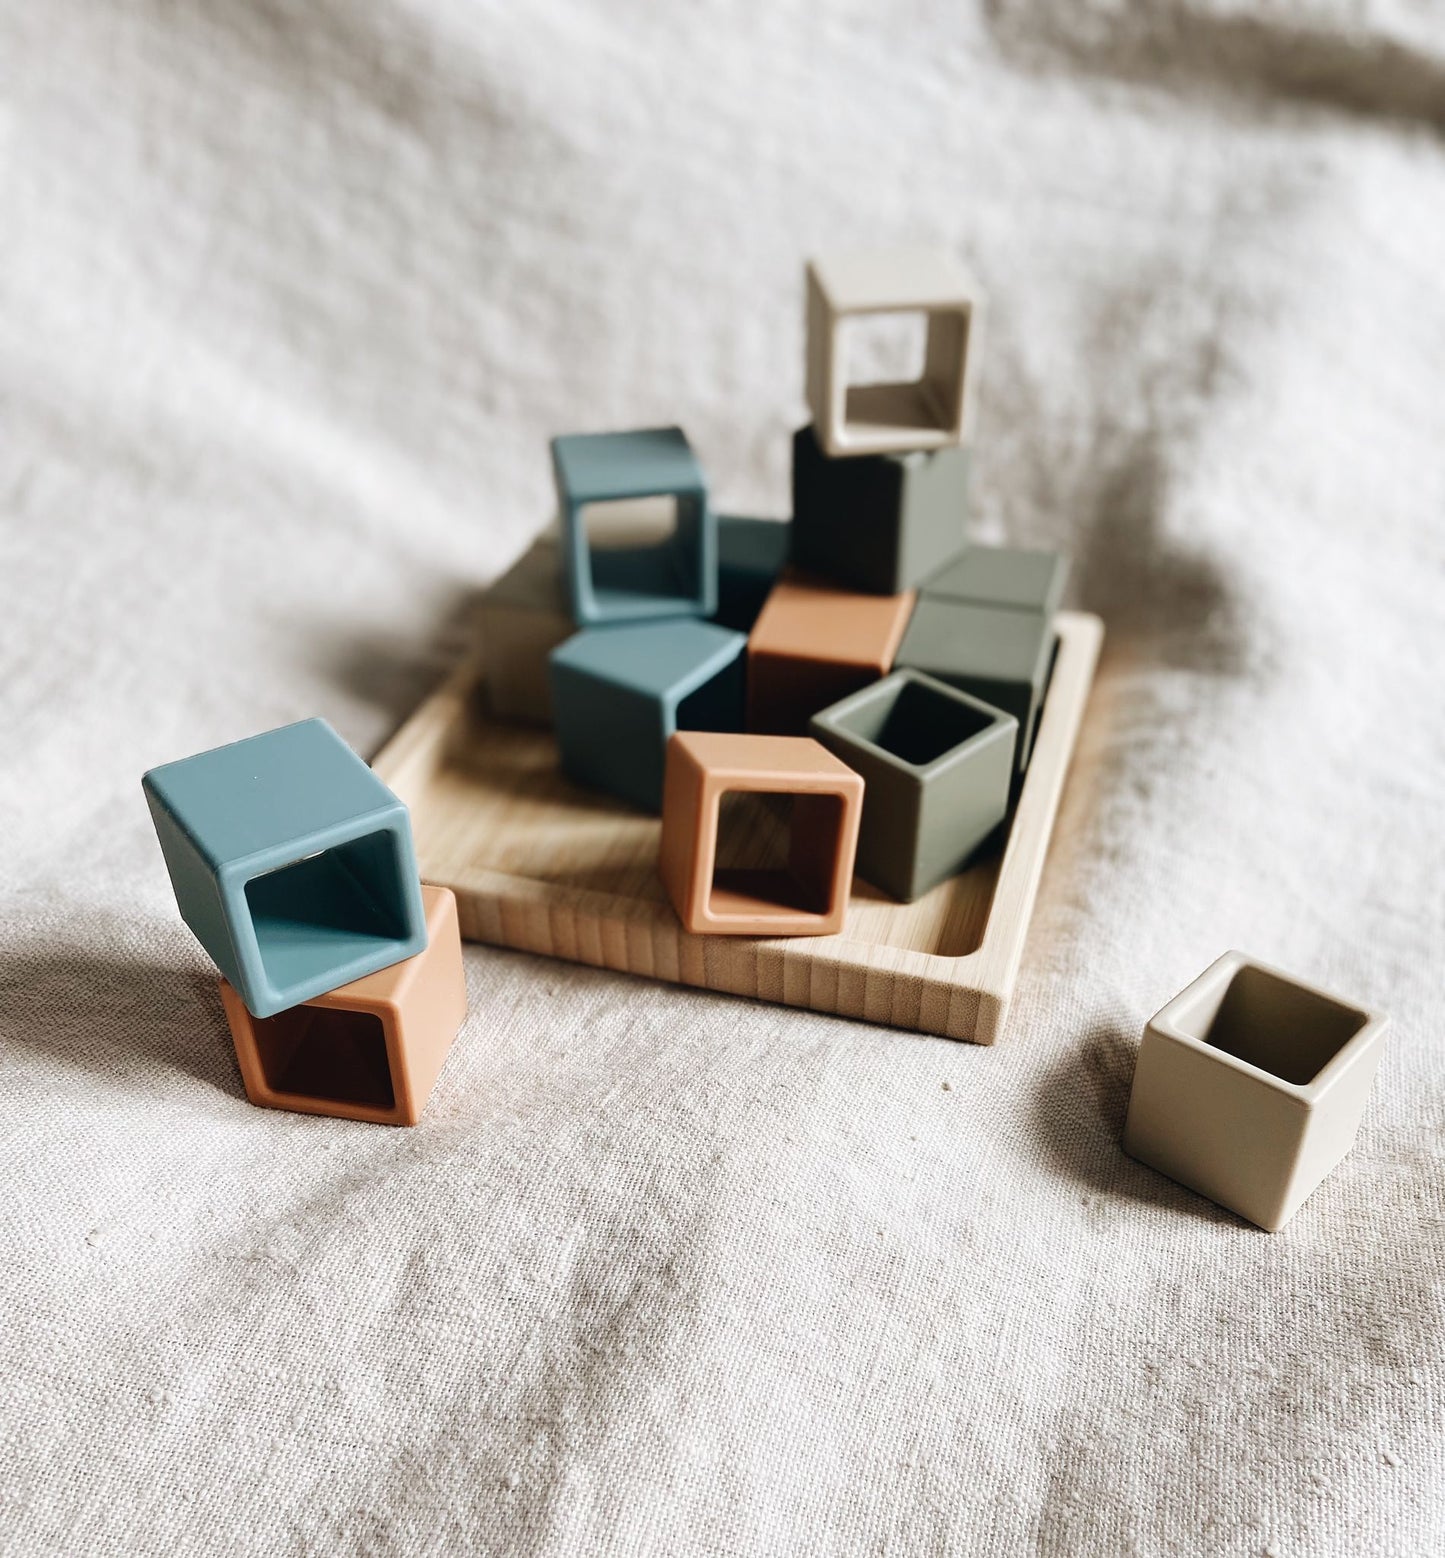 Cube Puzzle, Construction Cubes, Educational Toy